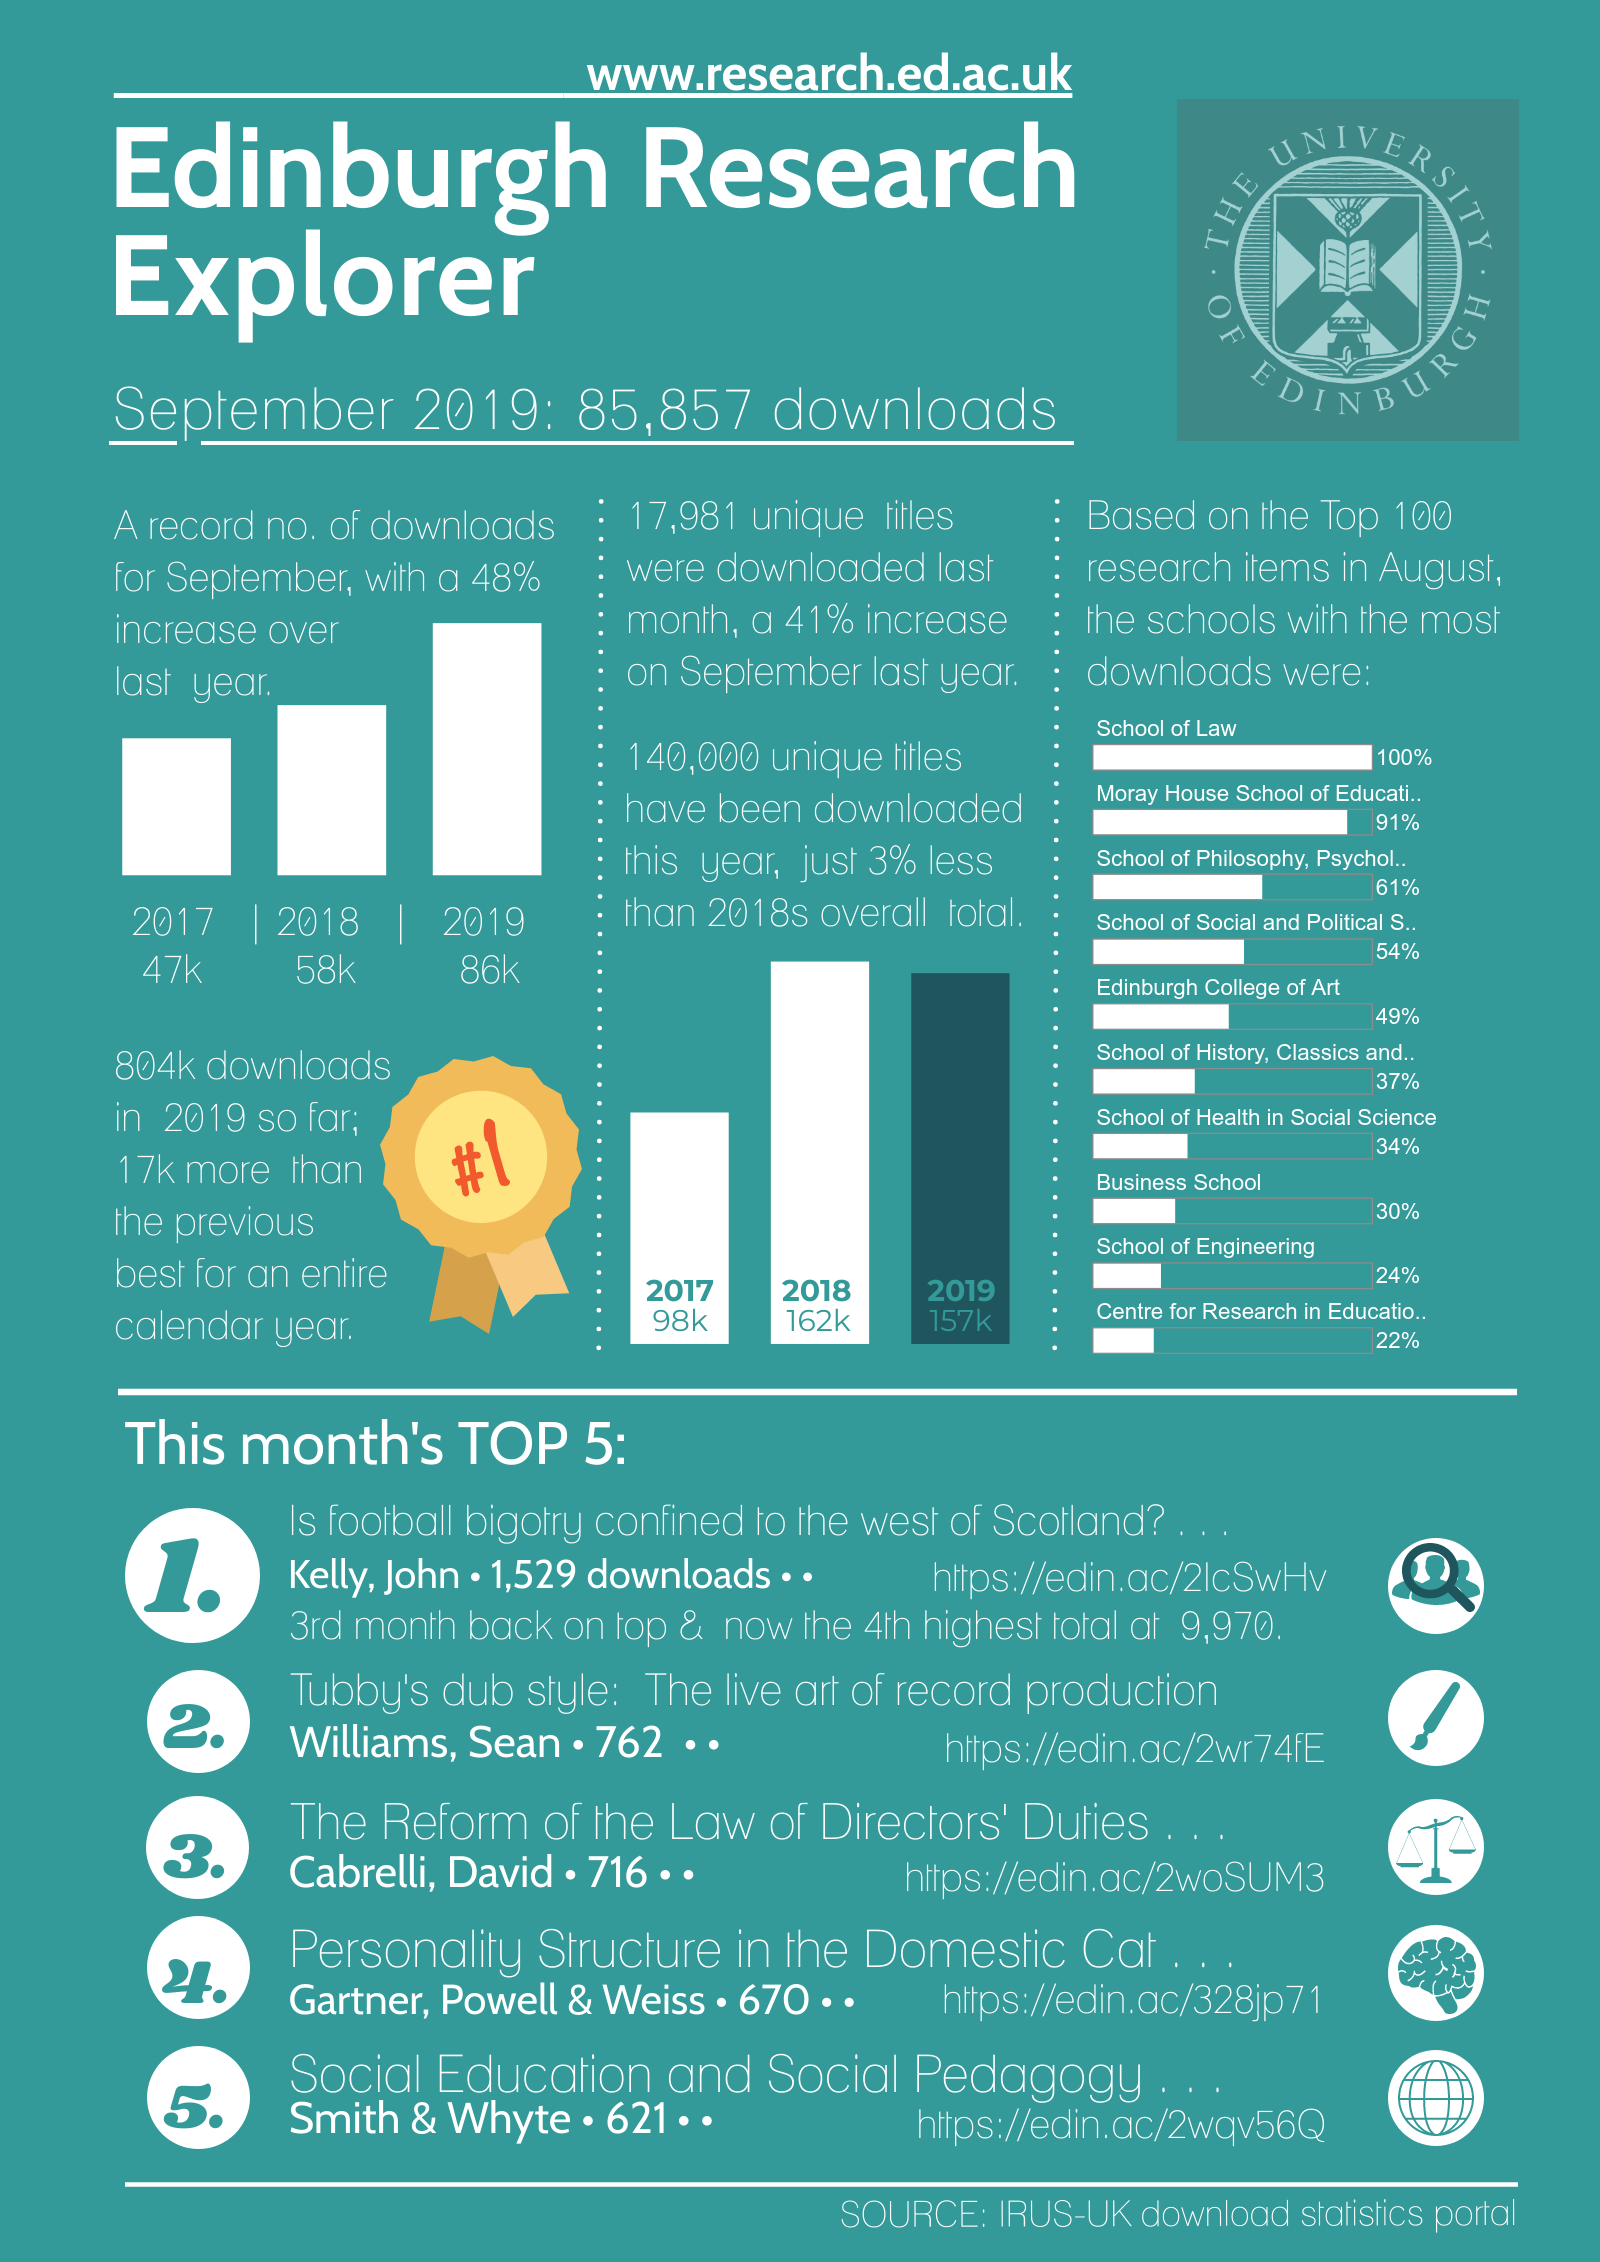 Edinburgh Research Explorer: September 2019 downloads infographic